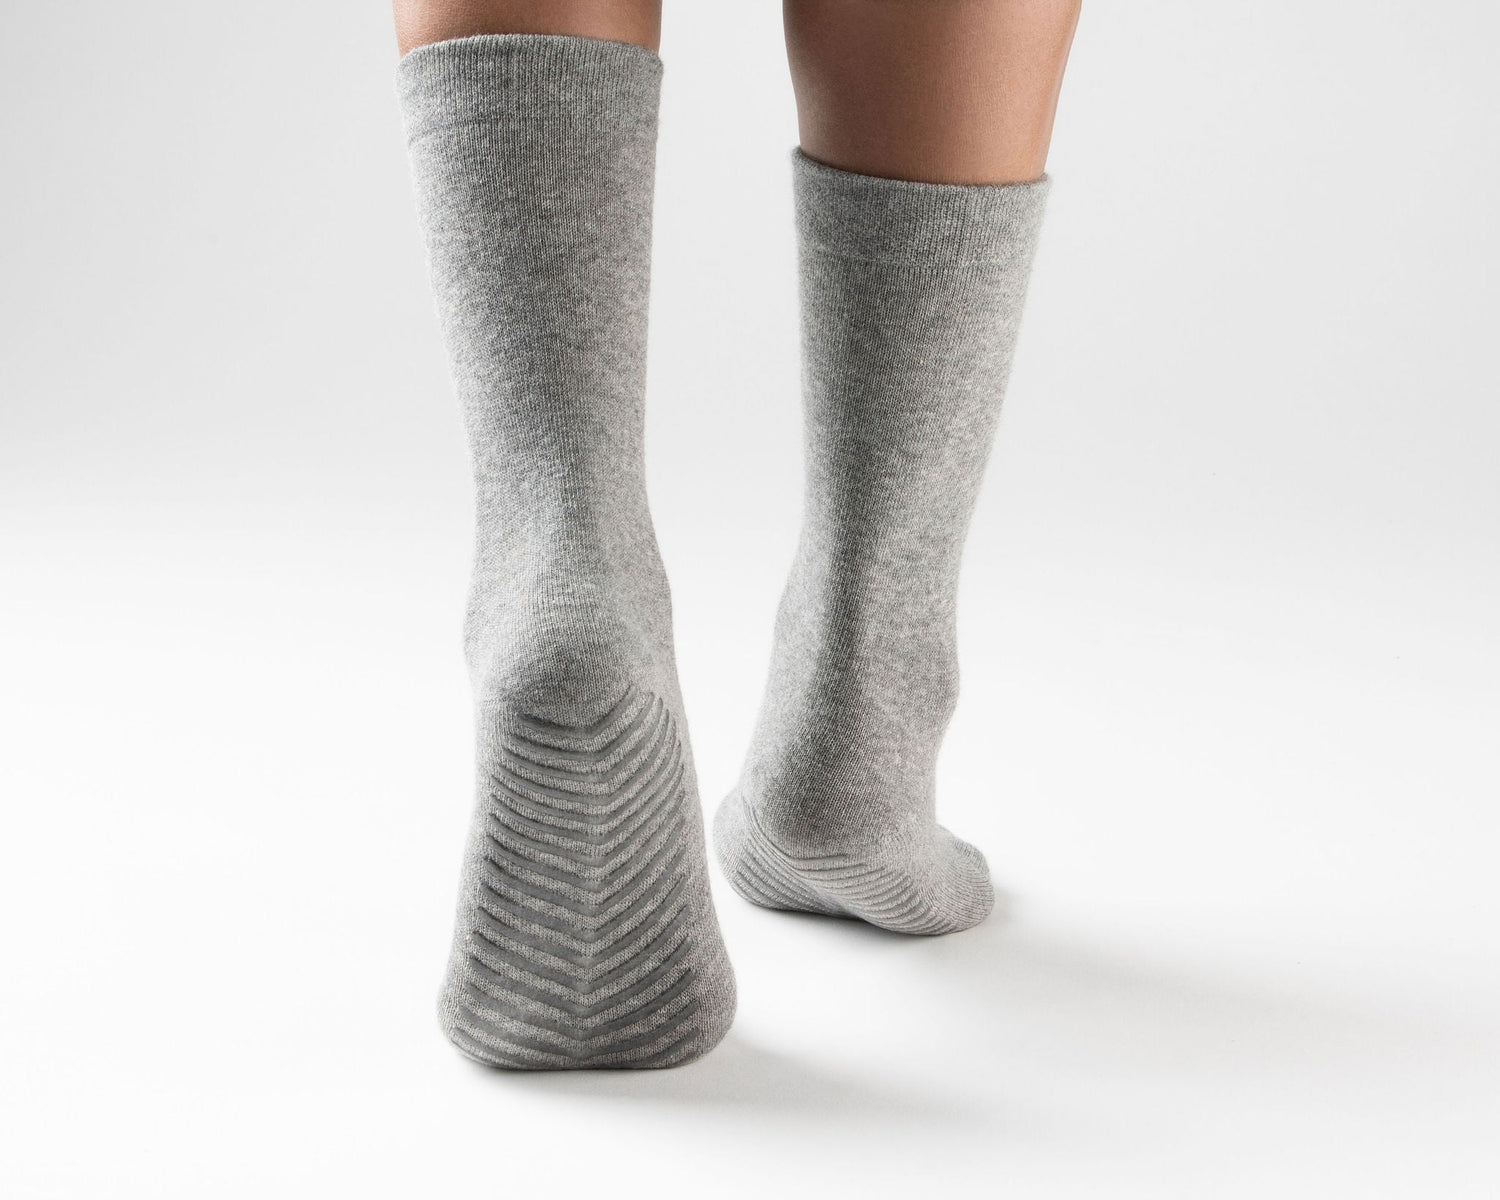 Model wearing light grey anti slip socks with tread pattern on the bottom.